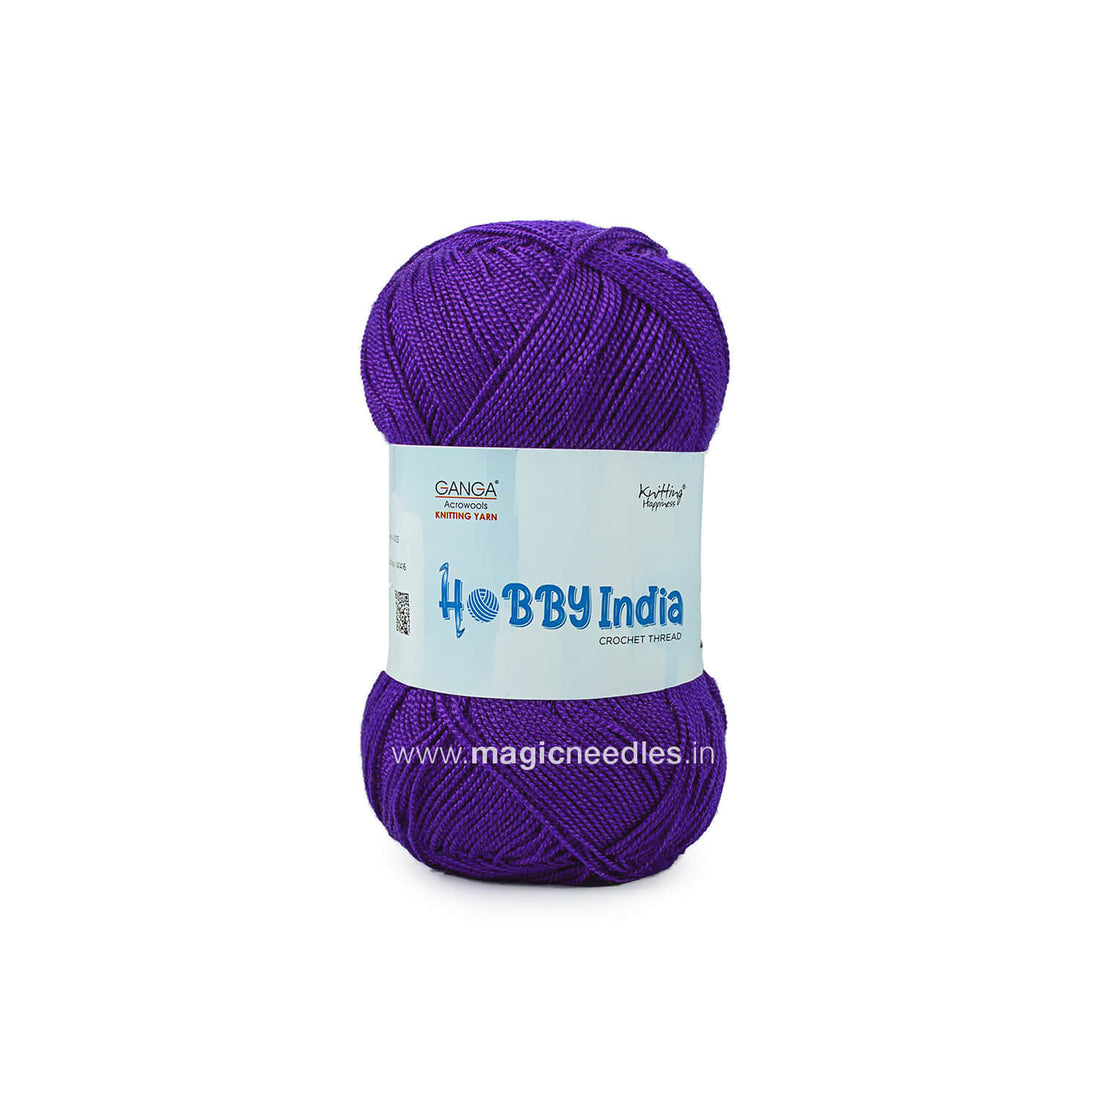 Ganga Hobby India Crochet Thread - Purple 74